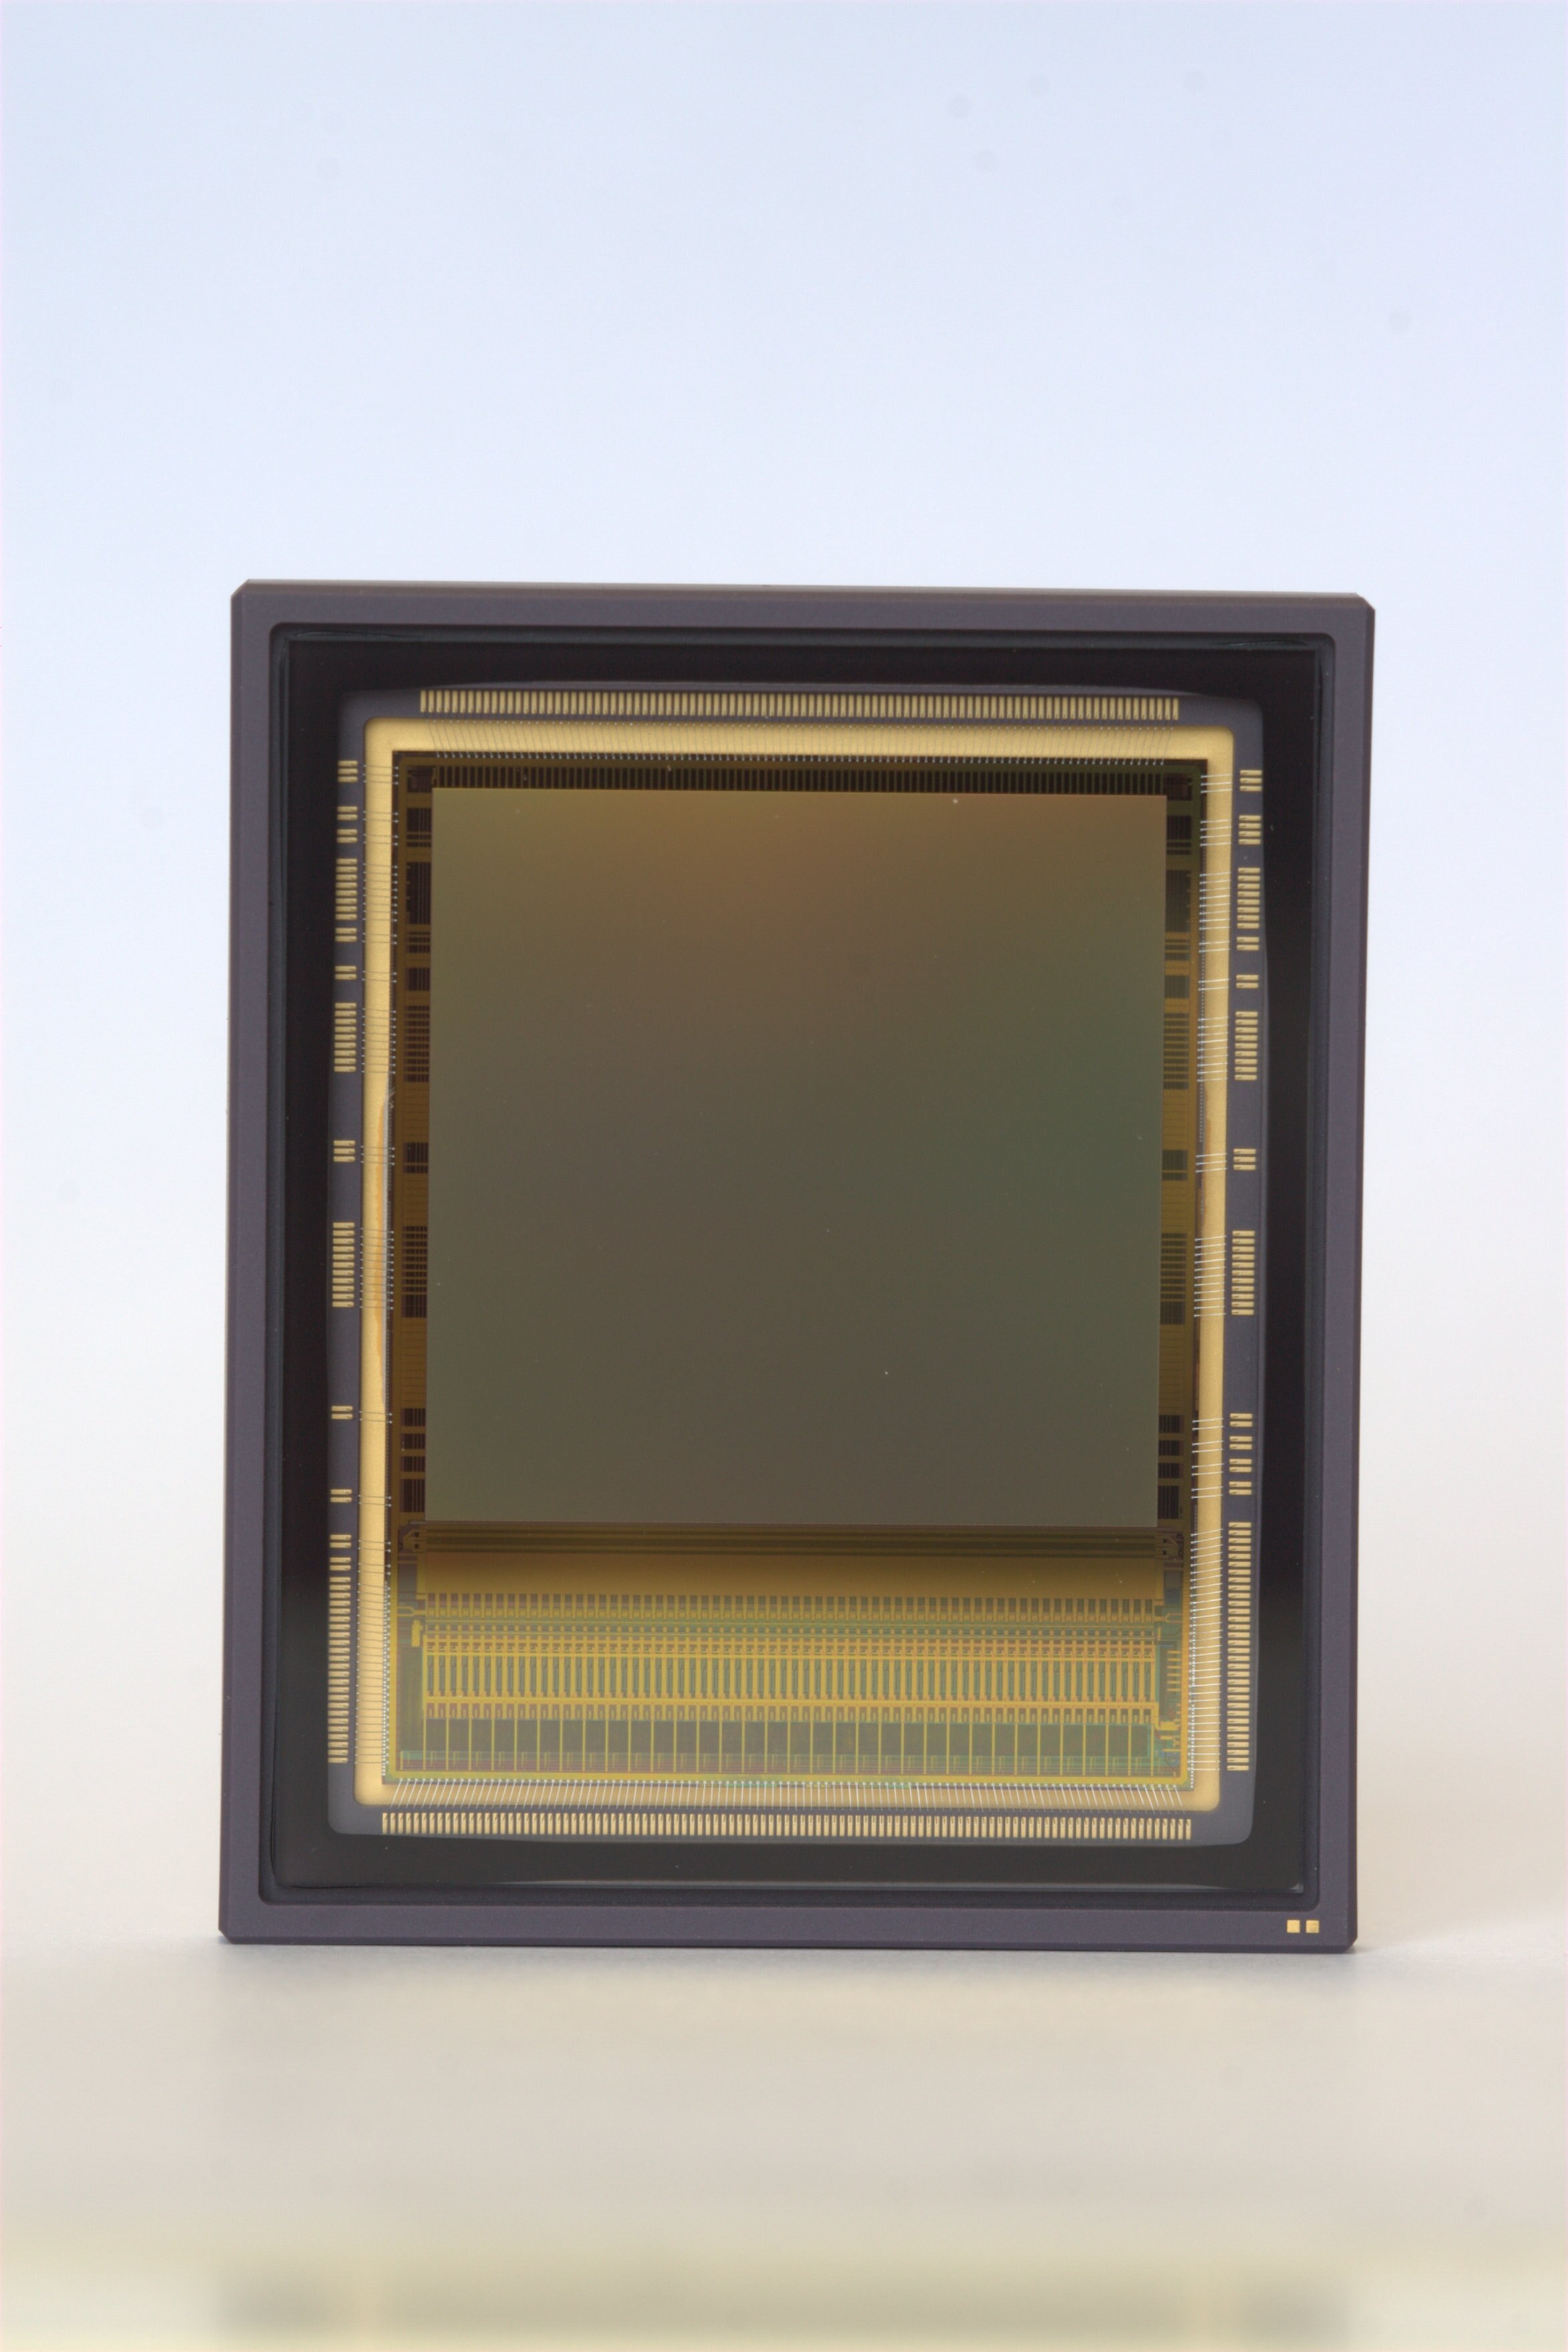 VITA25K: CMOS Image Sensor, 26.2 MP, Global Shutter